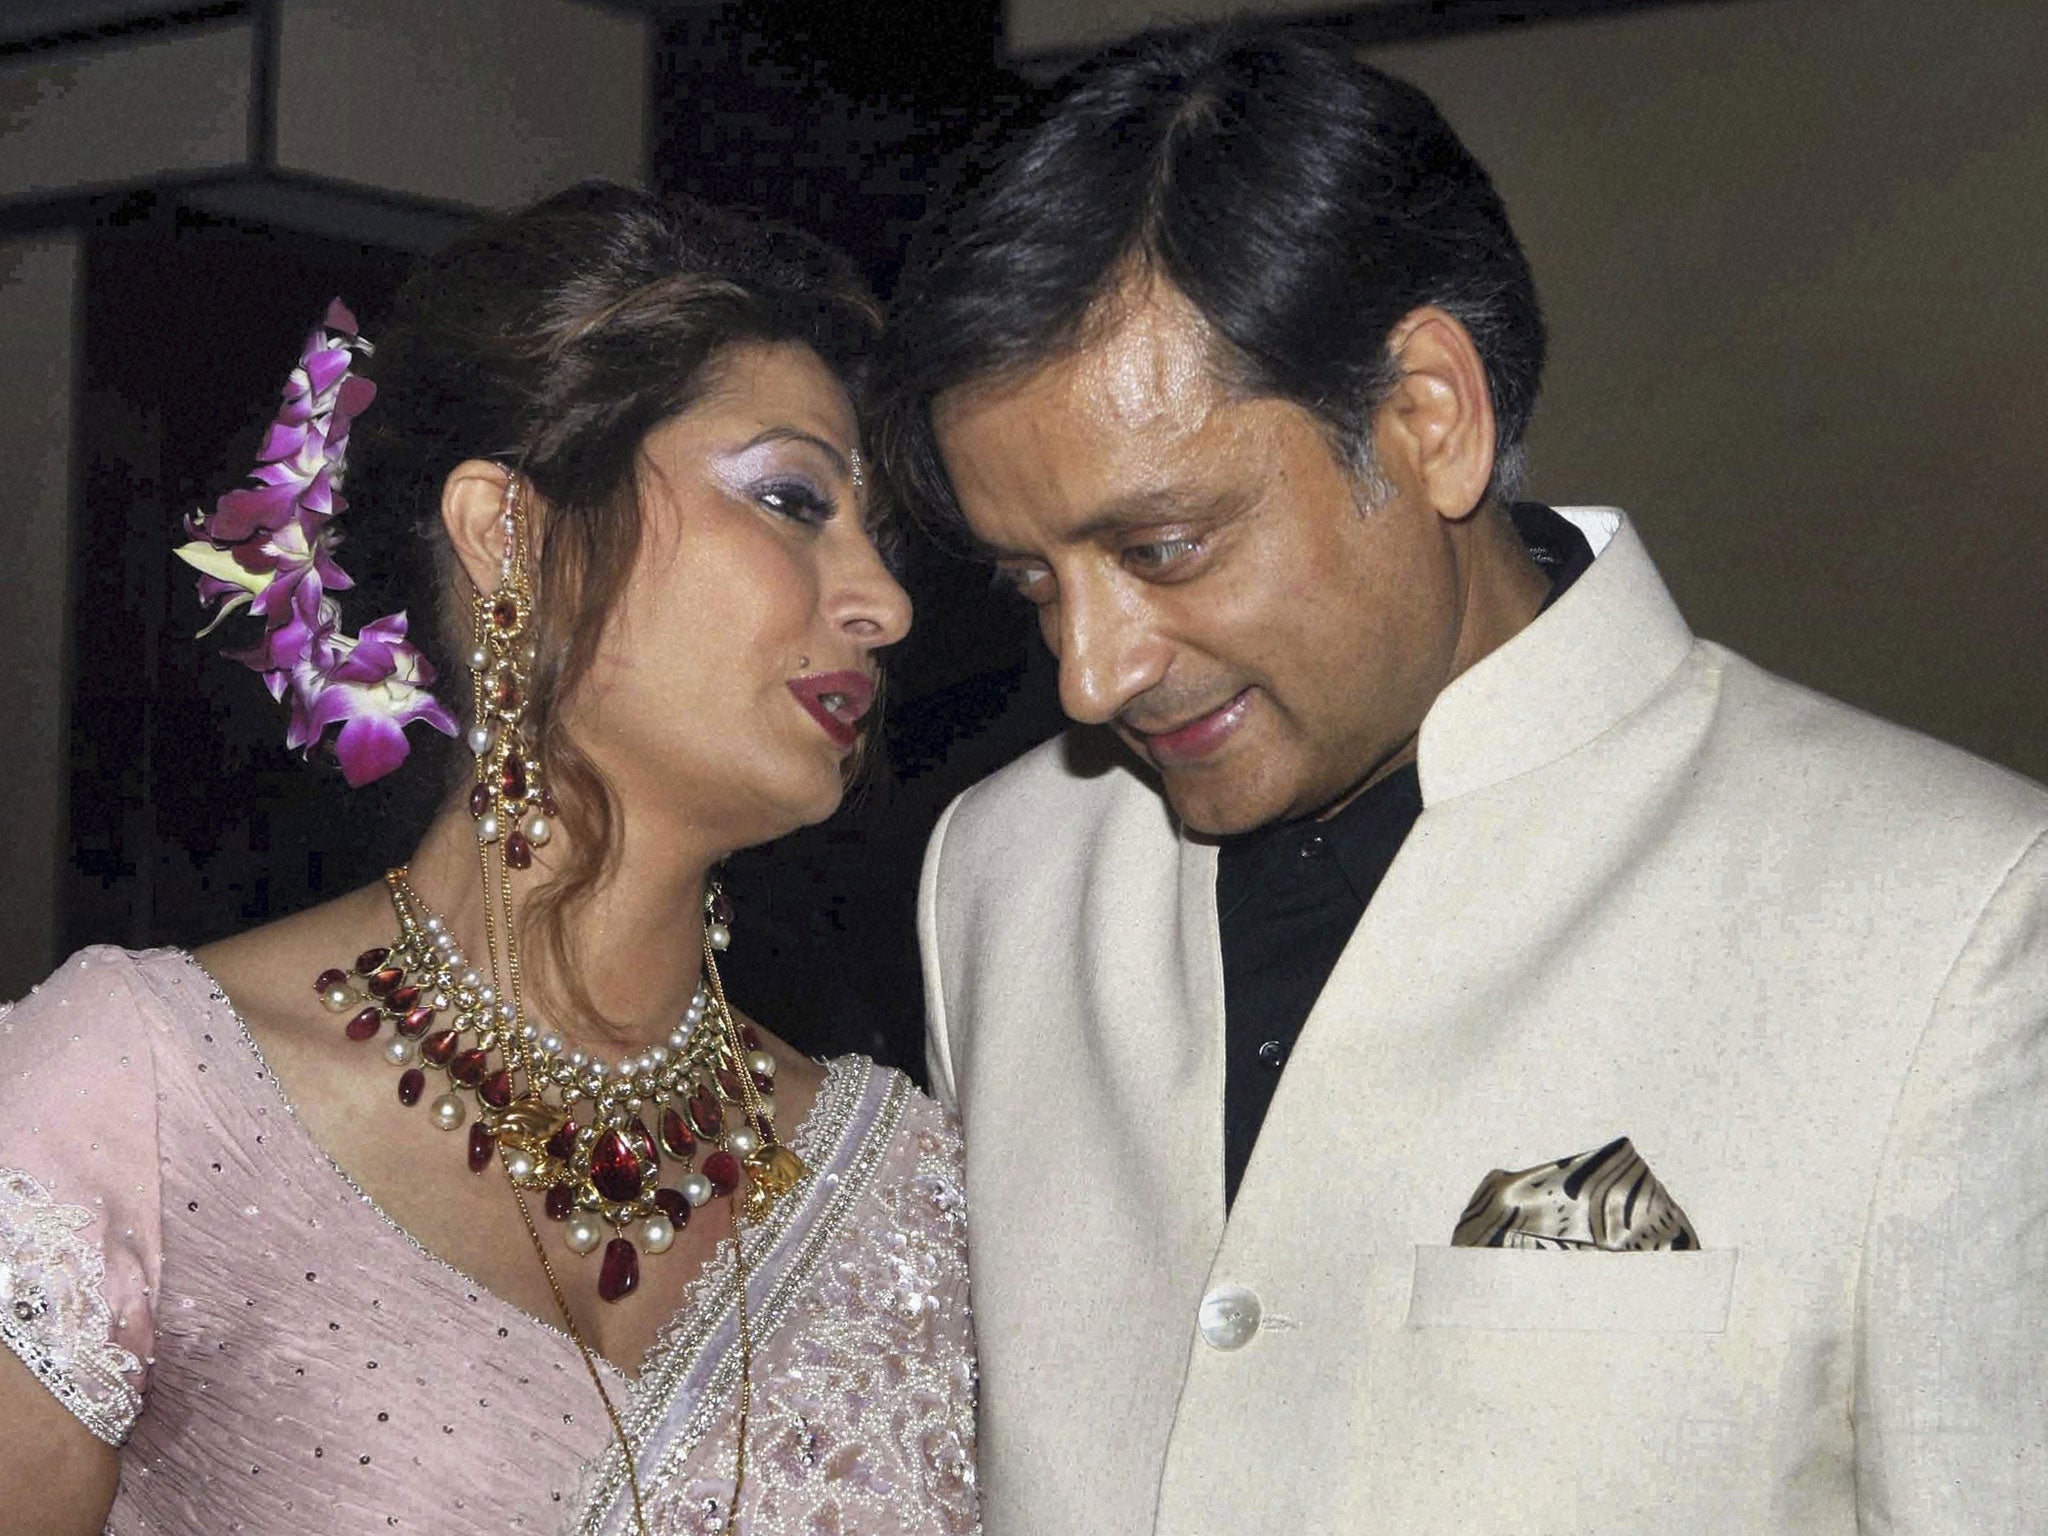 Shashi Tharoor and his wife Sunanda Pushkar at their wedding reception in New Delhi in 2010